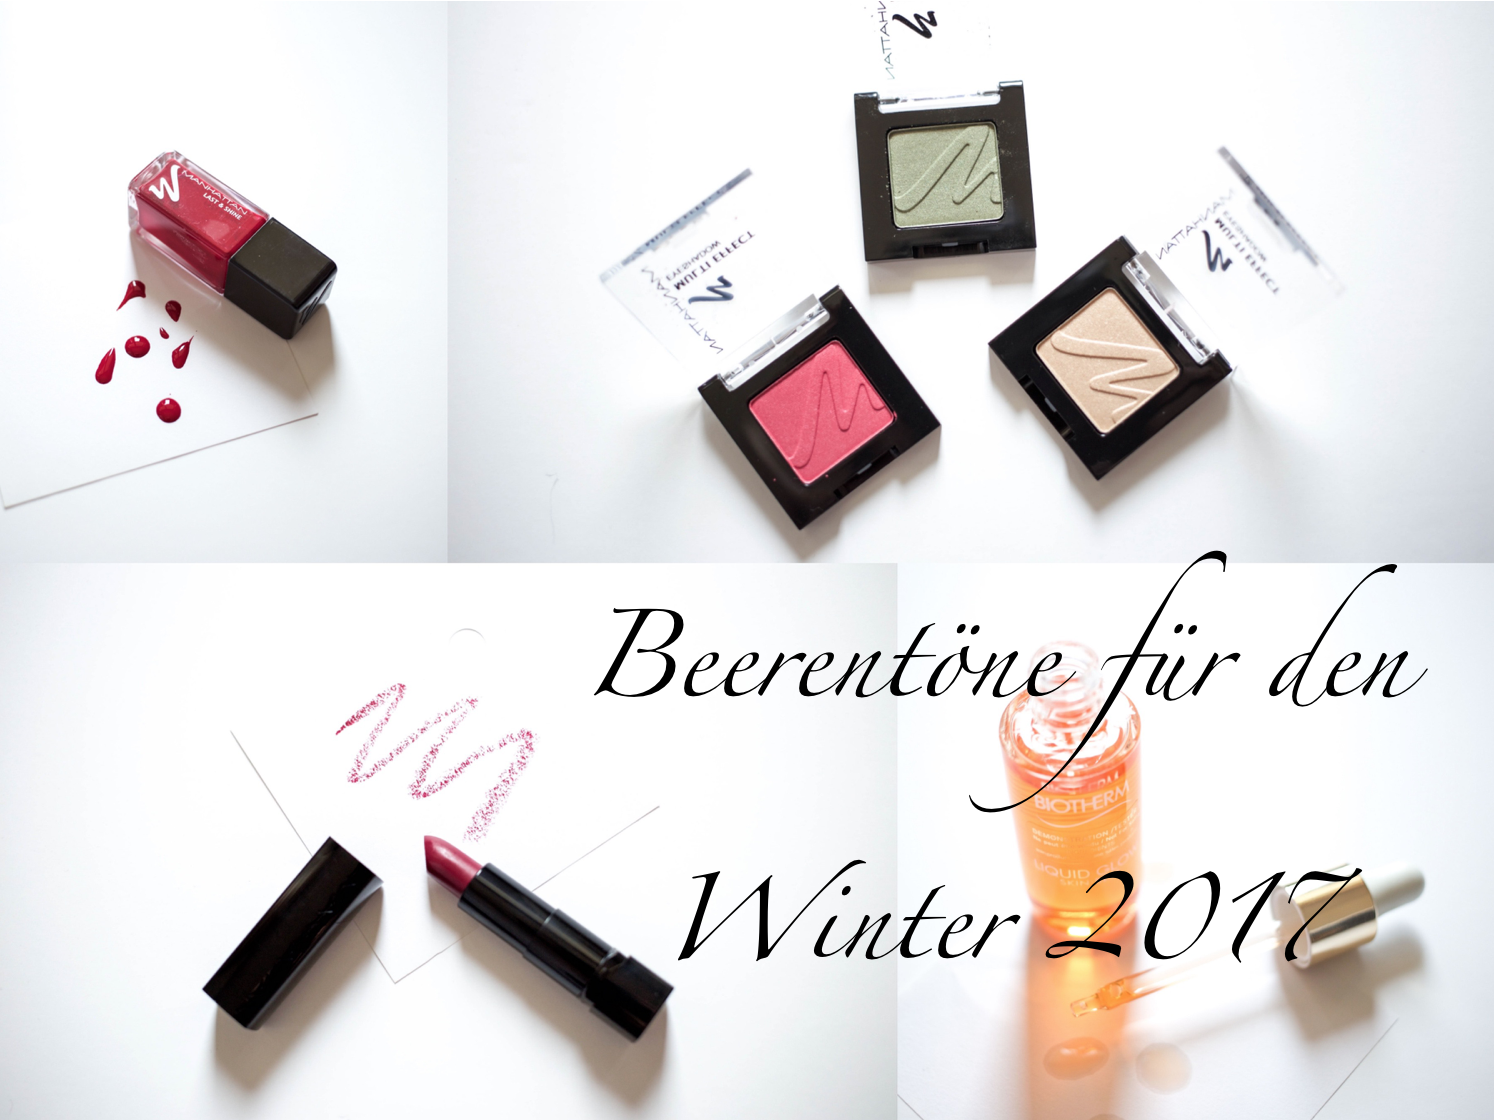 beerentoene-winter-2017-beautyblog-fashionblog-koeln-berlin